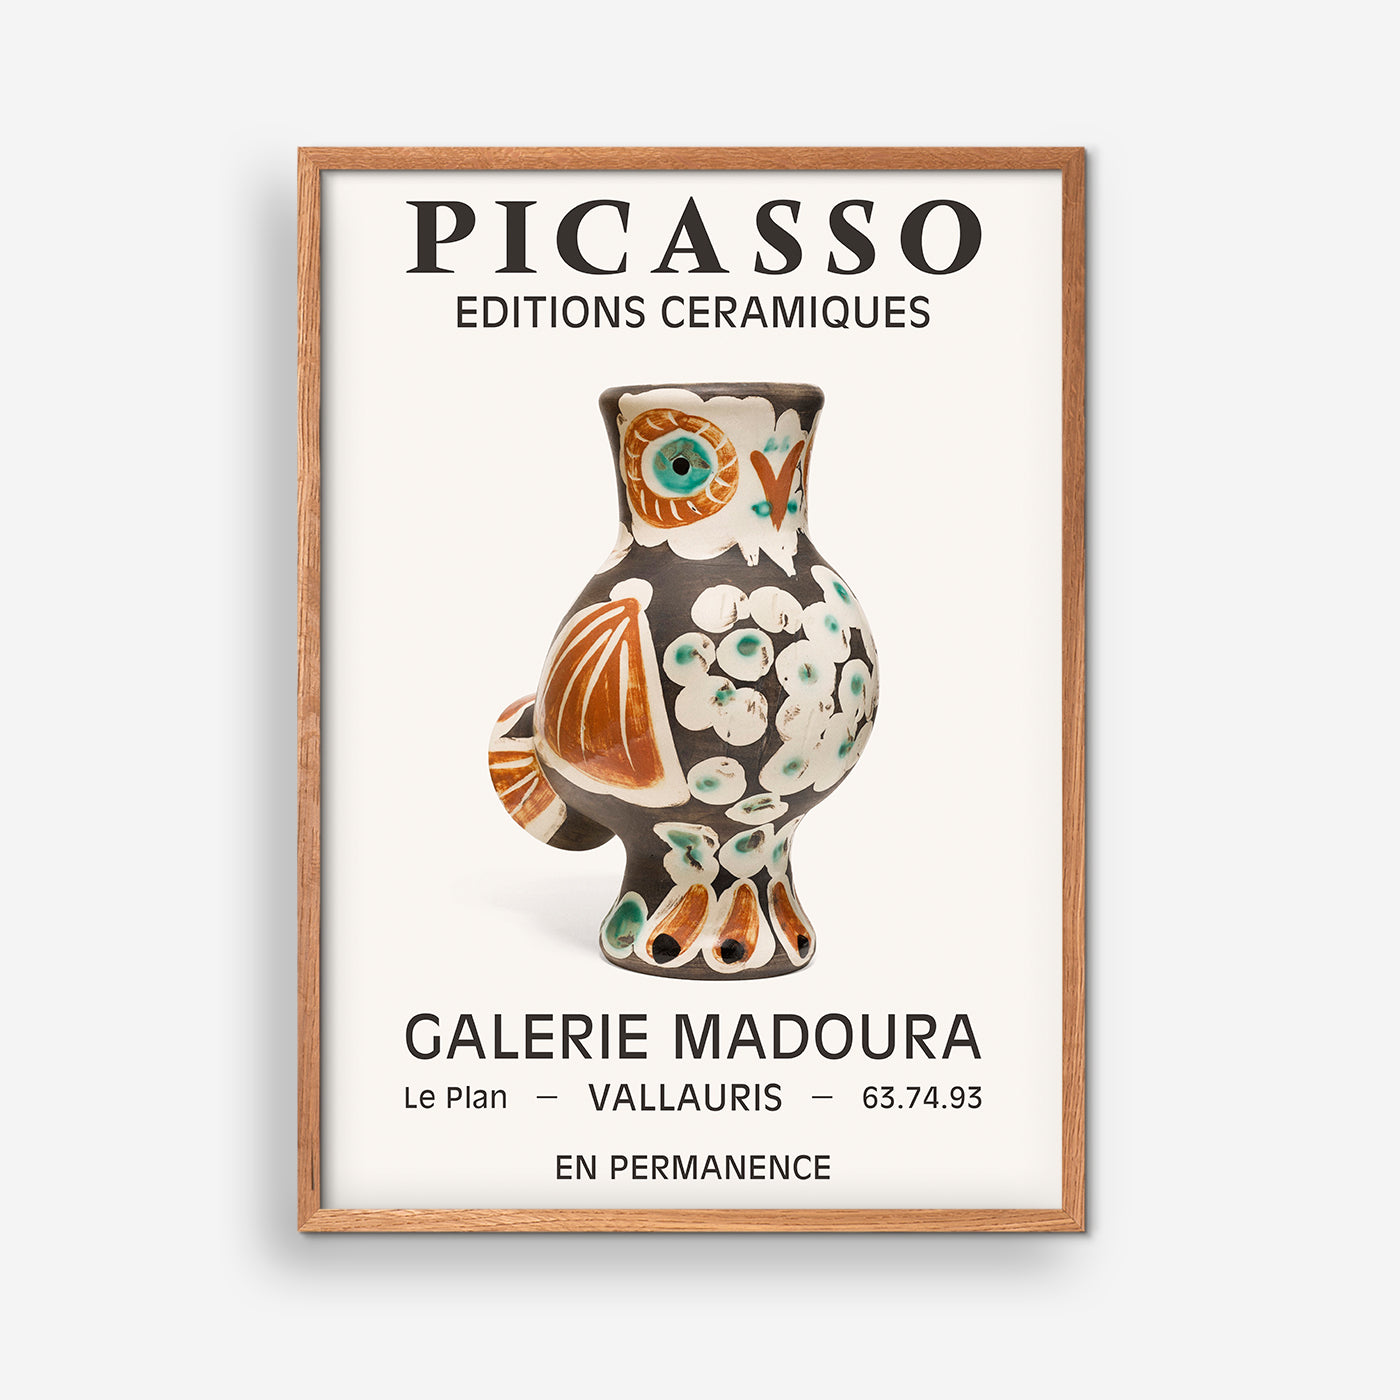 Editions Ceramiques - Picasso